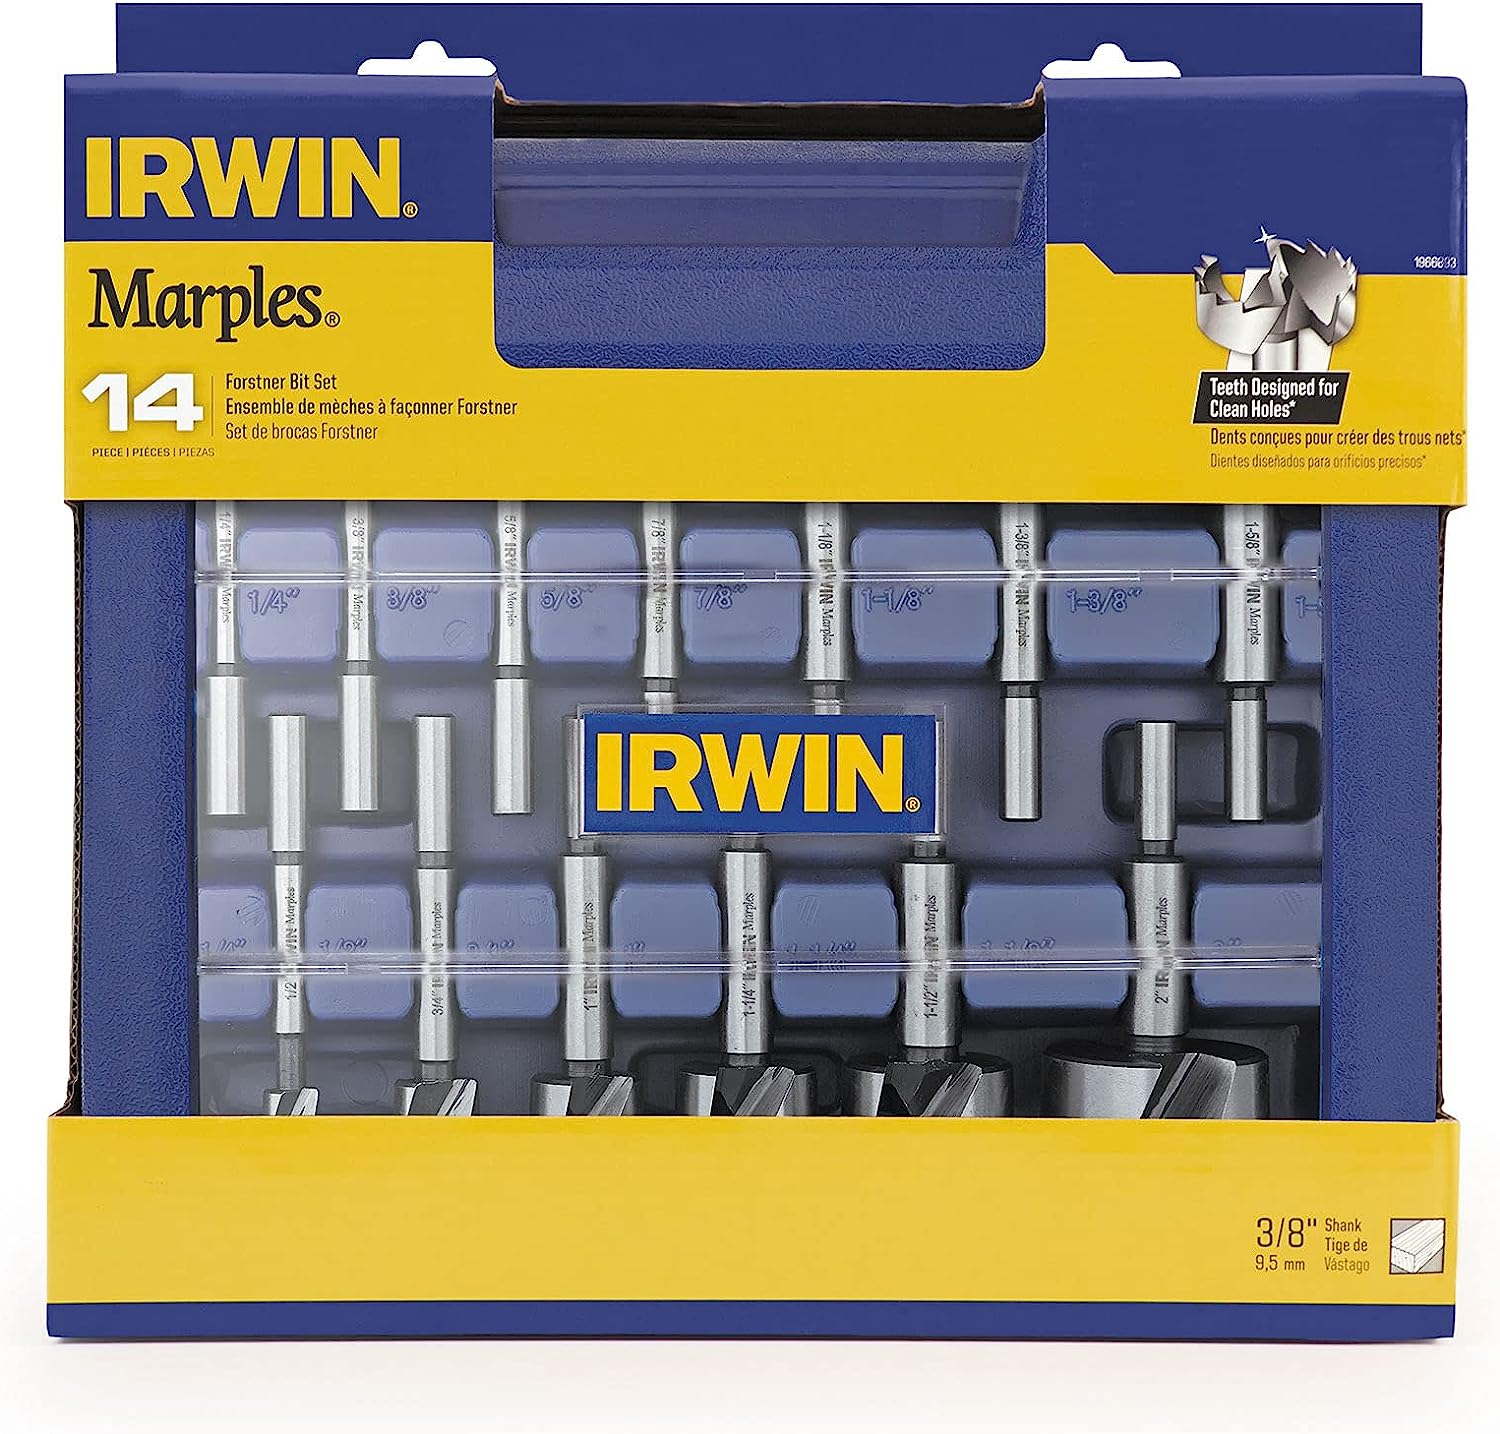 IRWIN Marples Forstner Bit Set, Wood Drill Bits, Made [...]